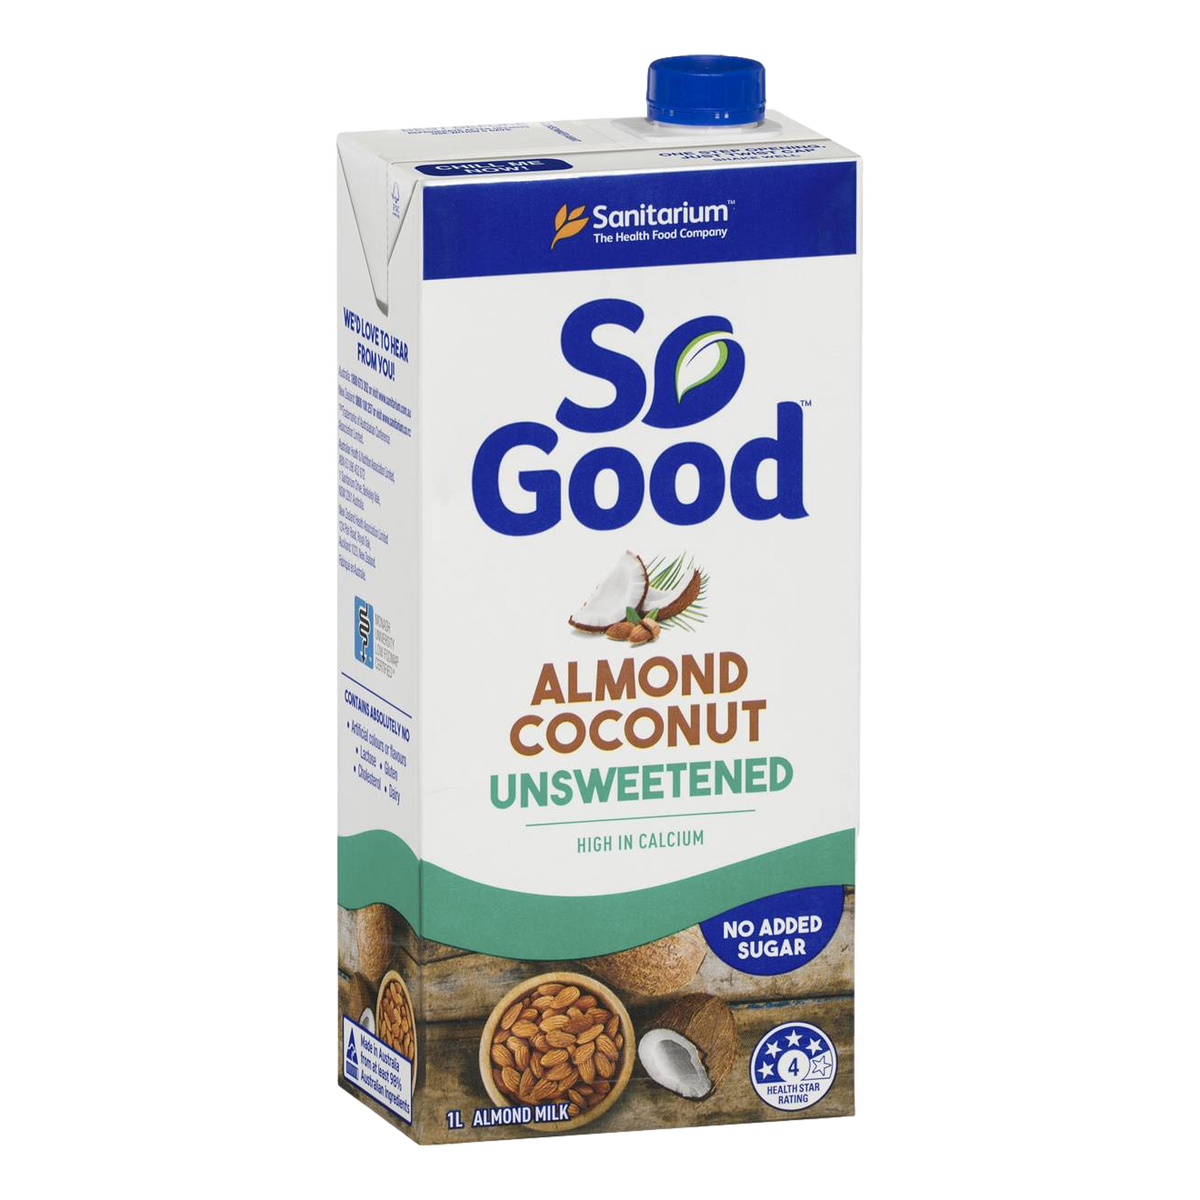 Sanitarium So Good Almond Coconut Unsweetened Milk Long Life 1L